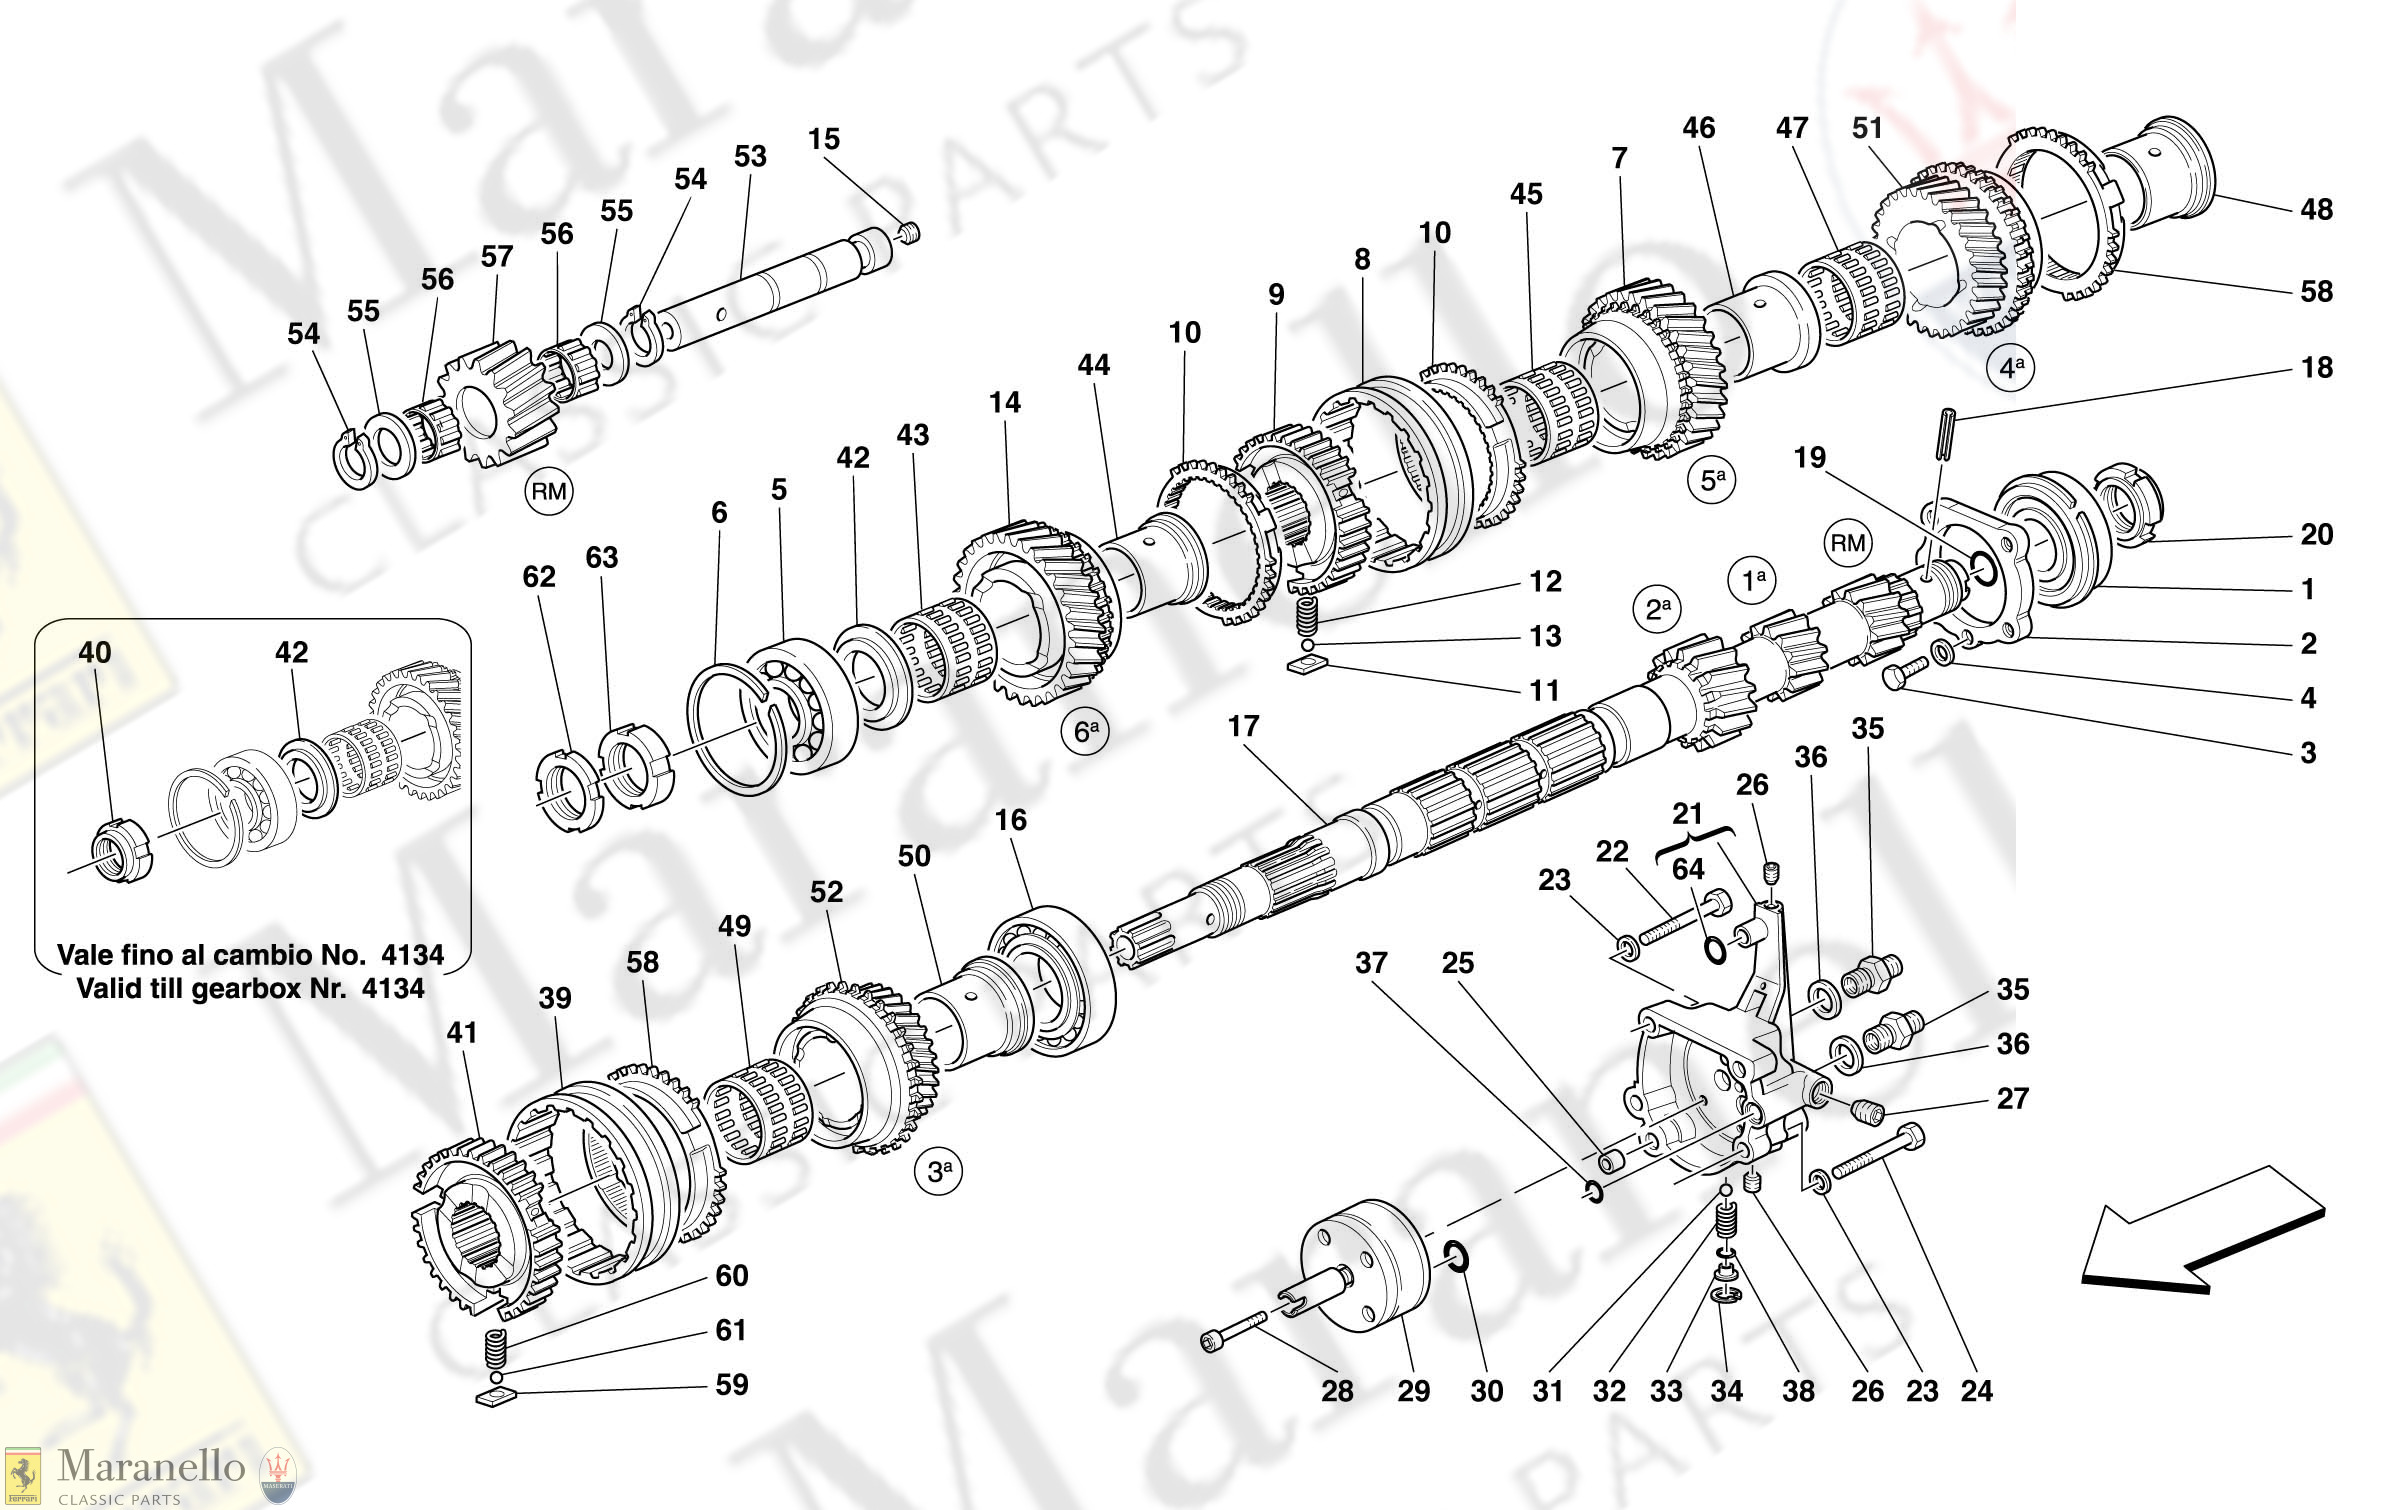 031 - Main Shaft Gears And Clutch Oil Pump